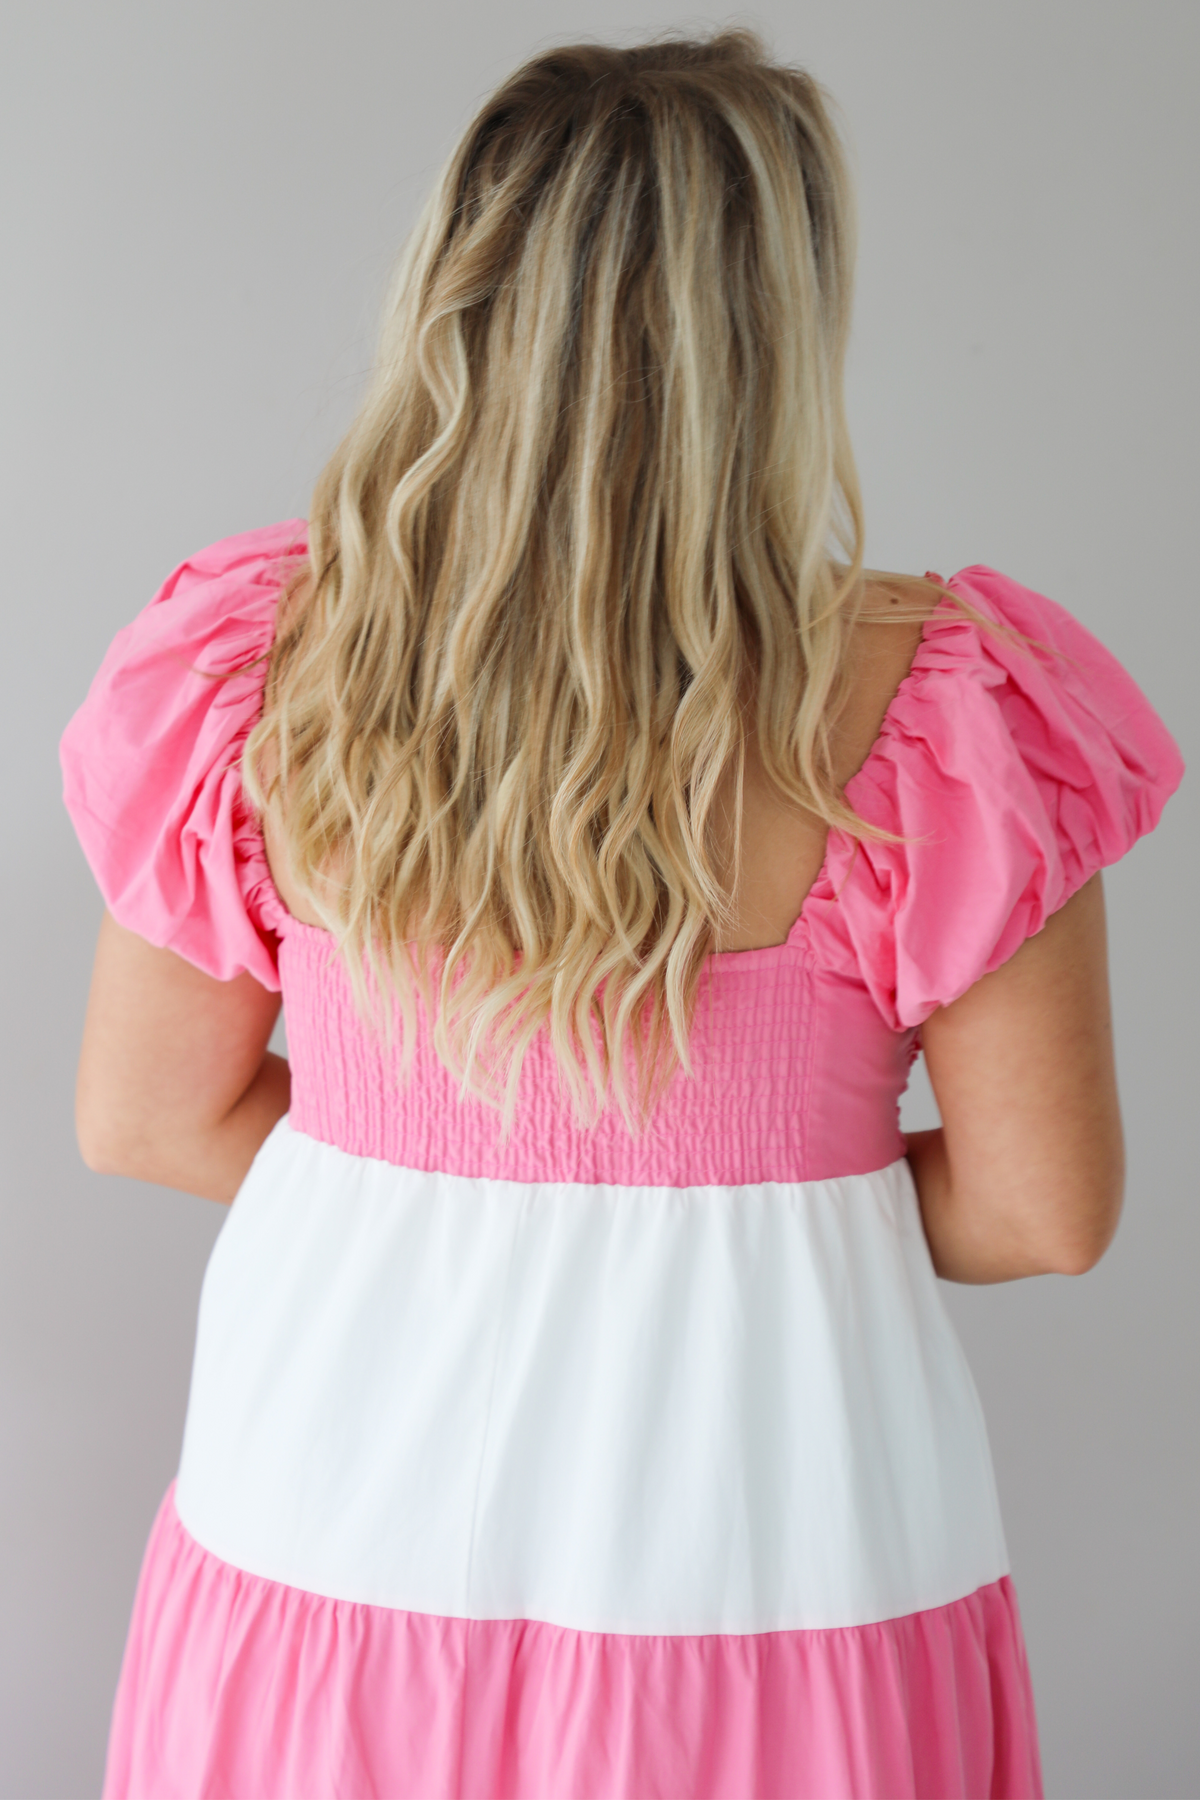 Color-Block Maxi Dress: Pink/White